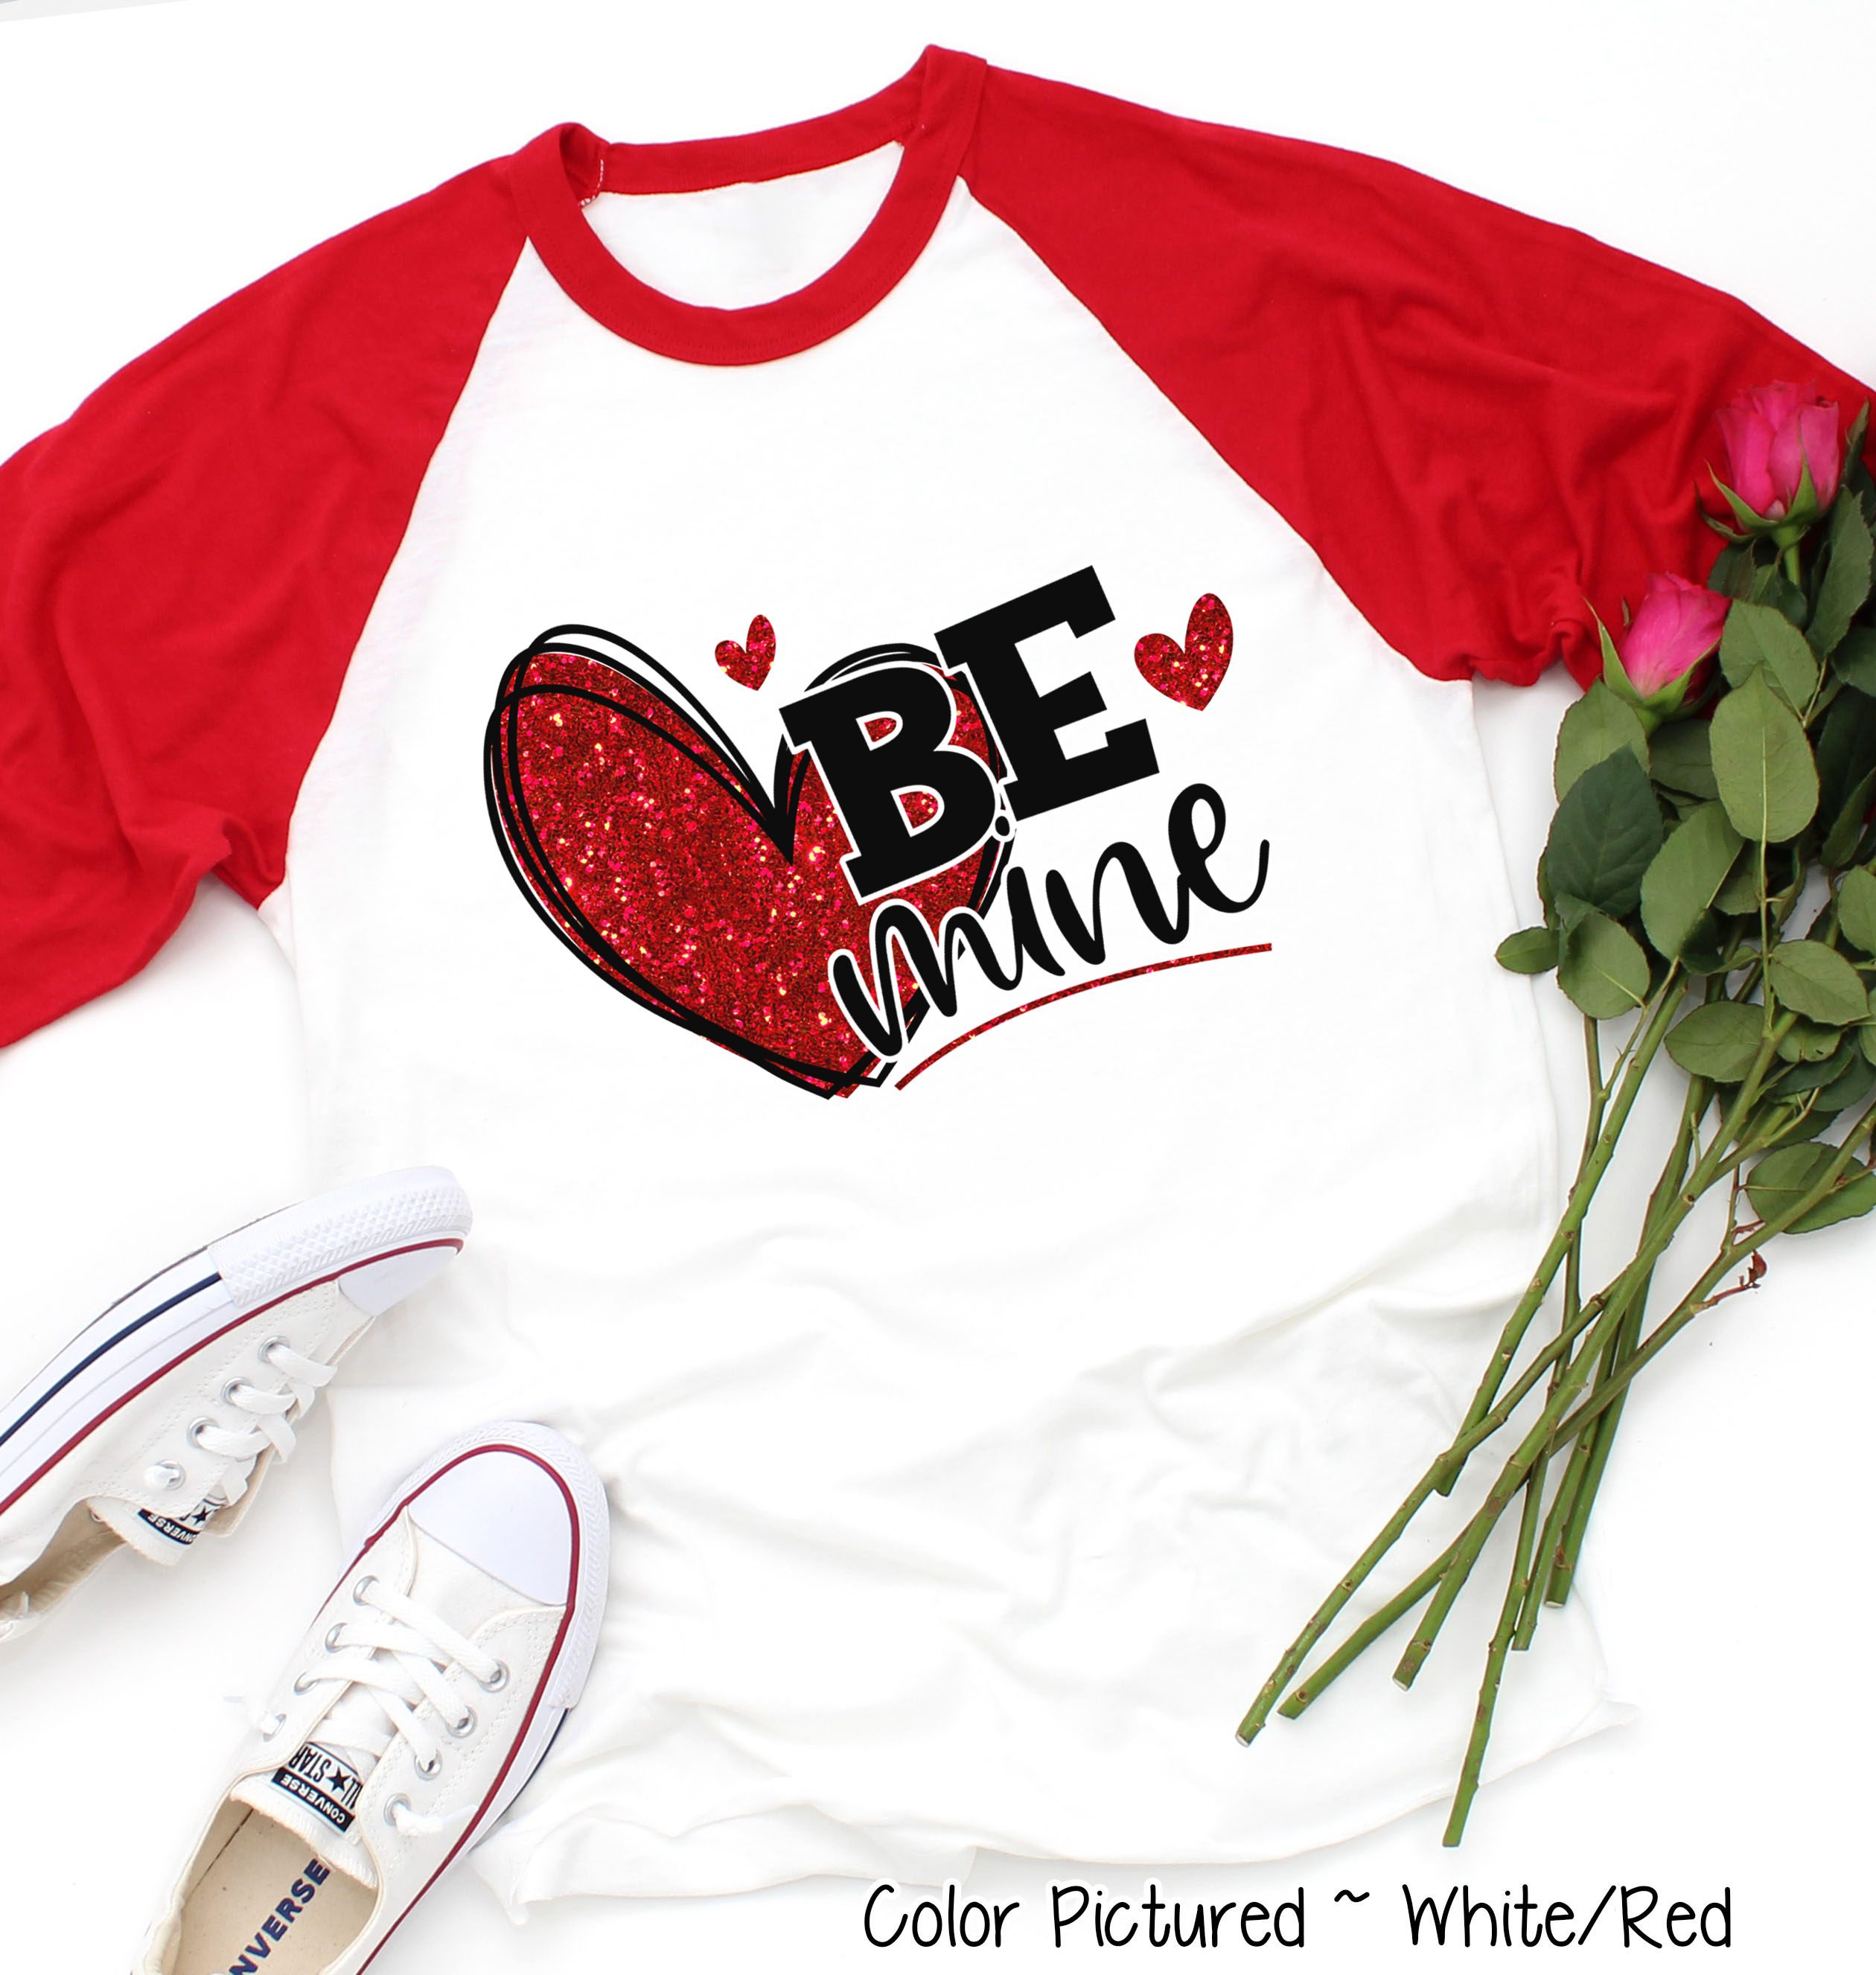 Be Mine Red Heart Valentine Shirt